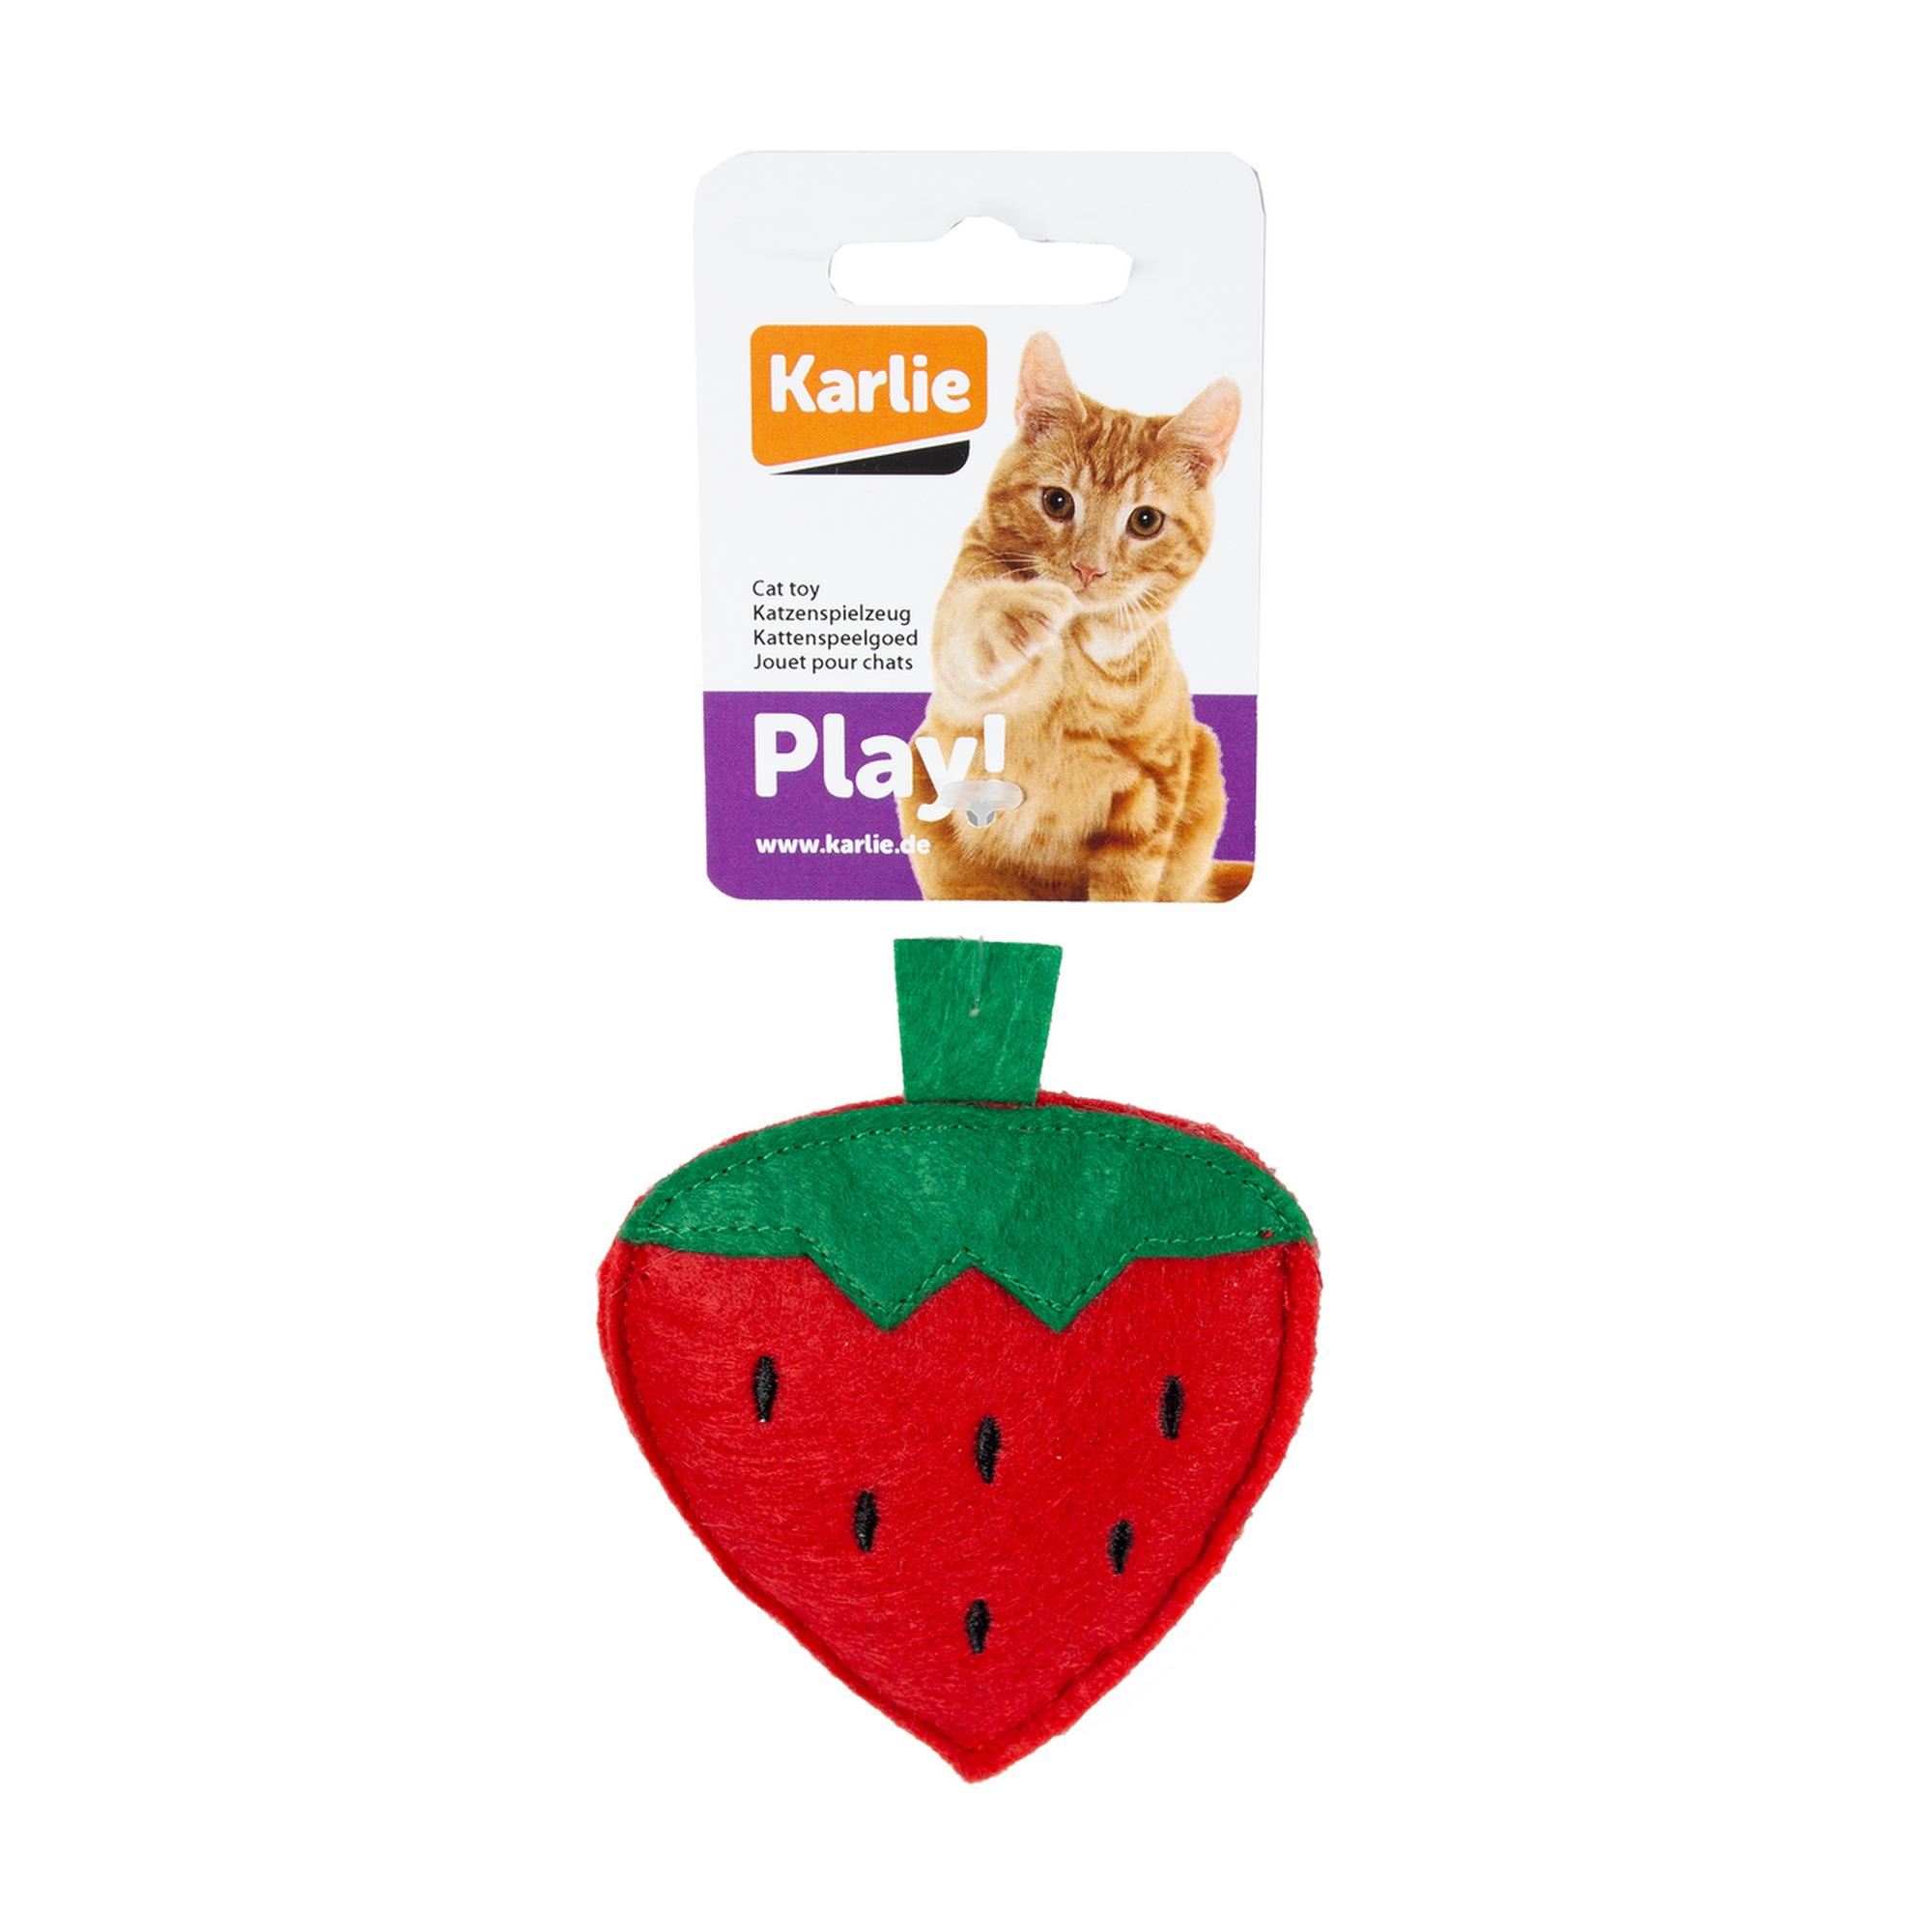 Katzenspielzeug Texil Erdbeere rot mit Catnip 10 cm + product picture